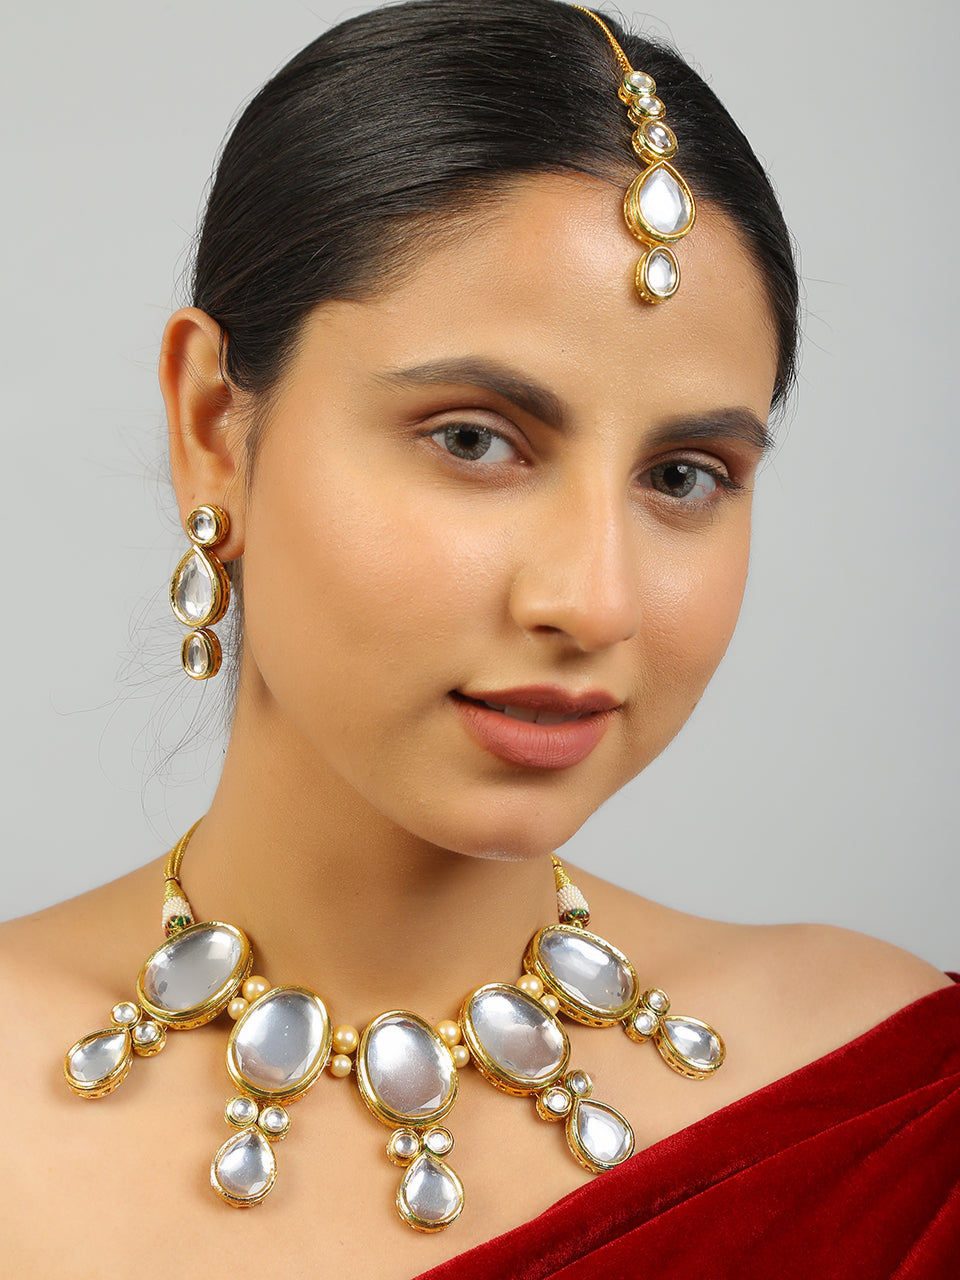 Women's Handcrafted Maharani Kundan Necklace With Earrings & Mang Tika - Femizen